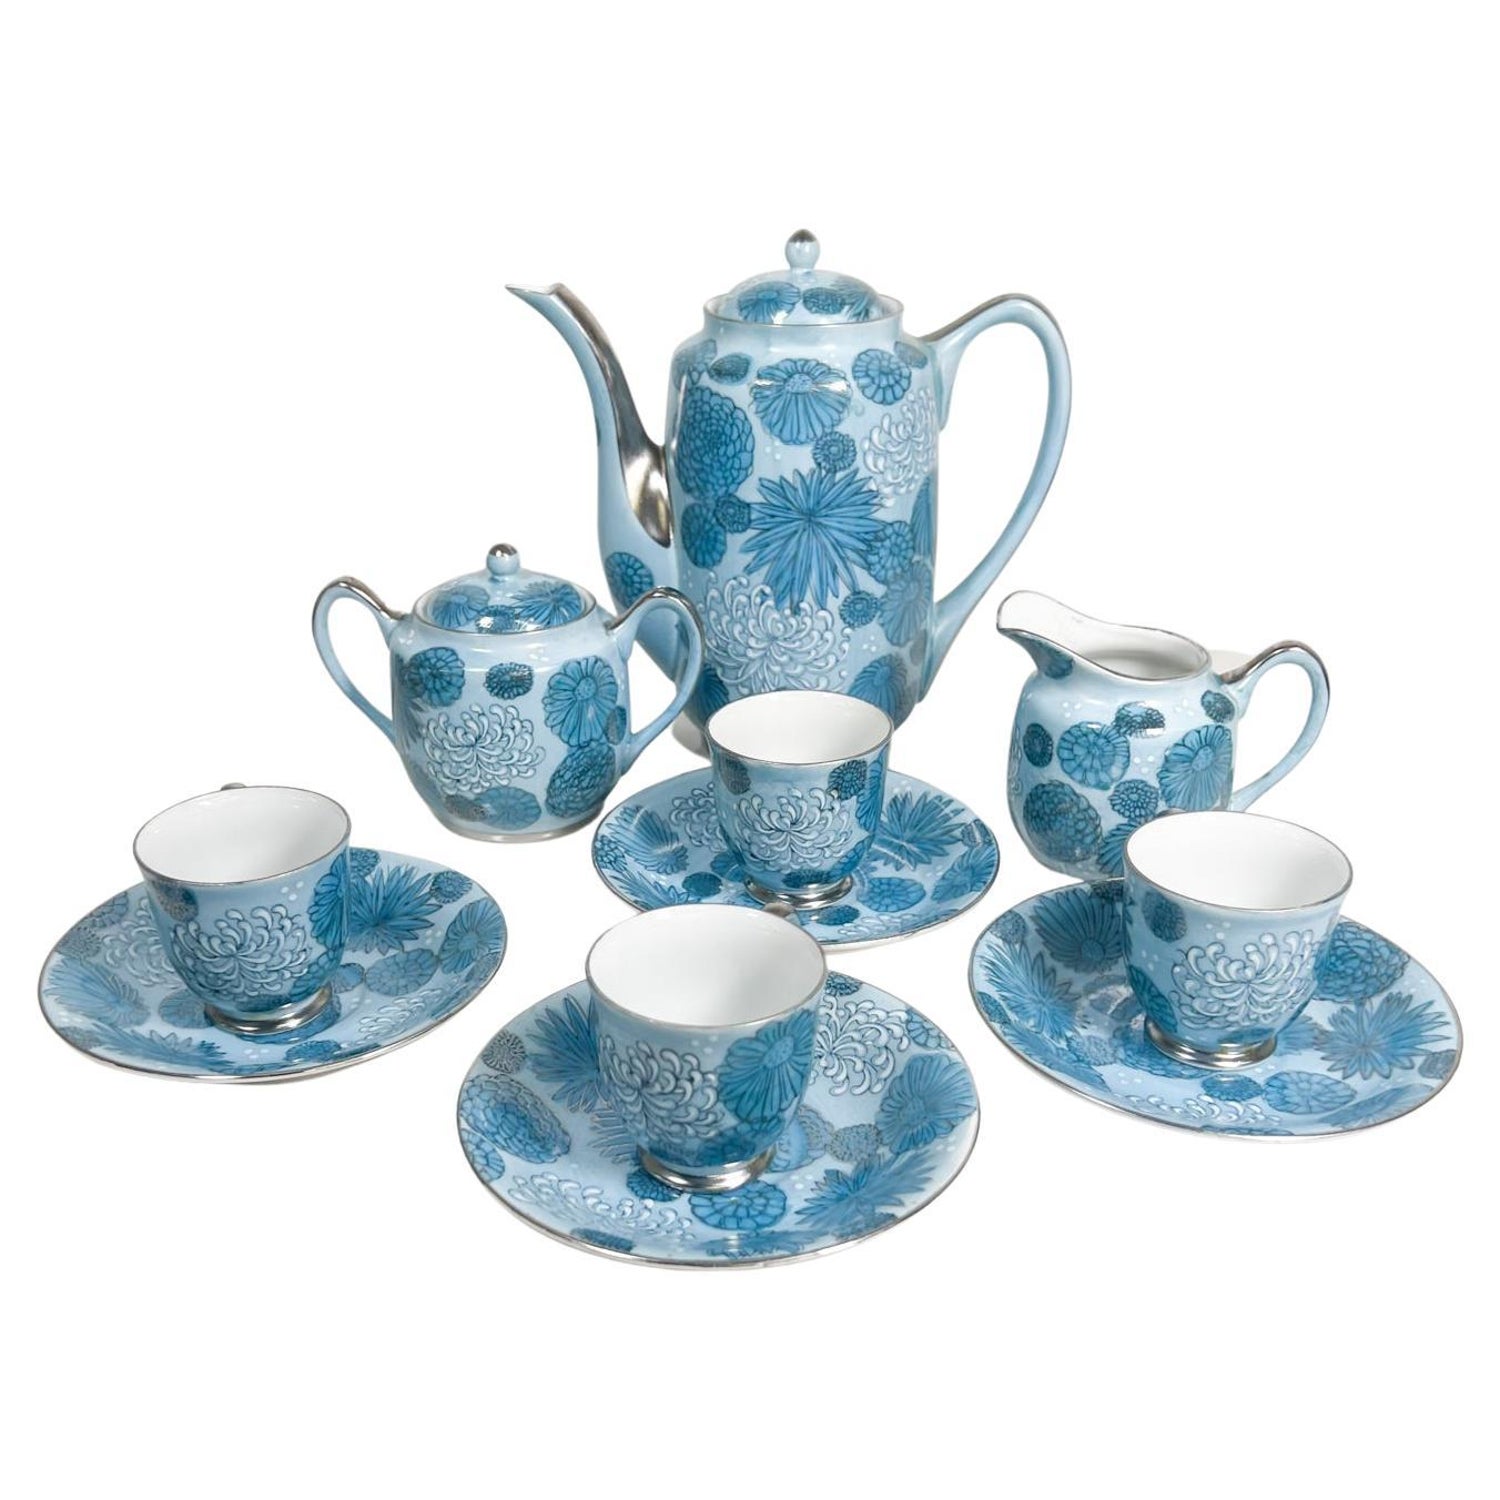 https://a.1stdibscdn.com/mid-20th-century-sculptural-blue-tea-service-set-for-four-japan-for-sale/f_9715/f_352564821689446425918/f_35256482_1689446426330_bg_processed.jpg?width=1500